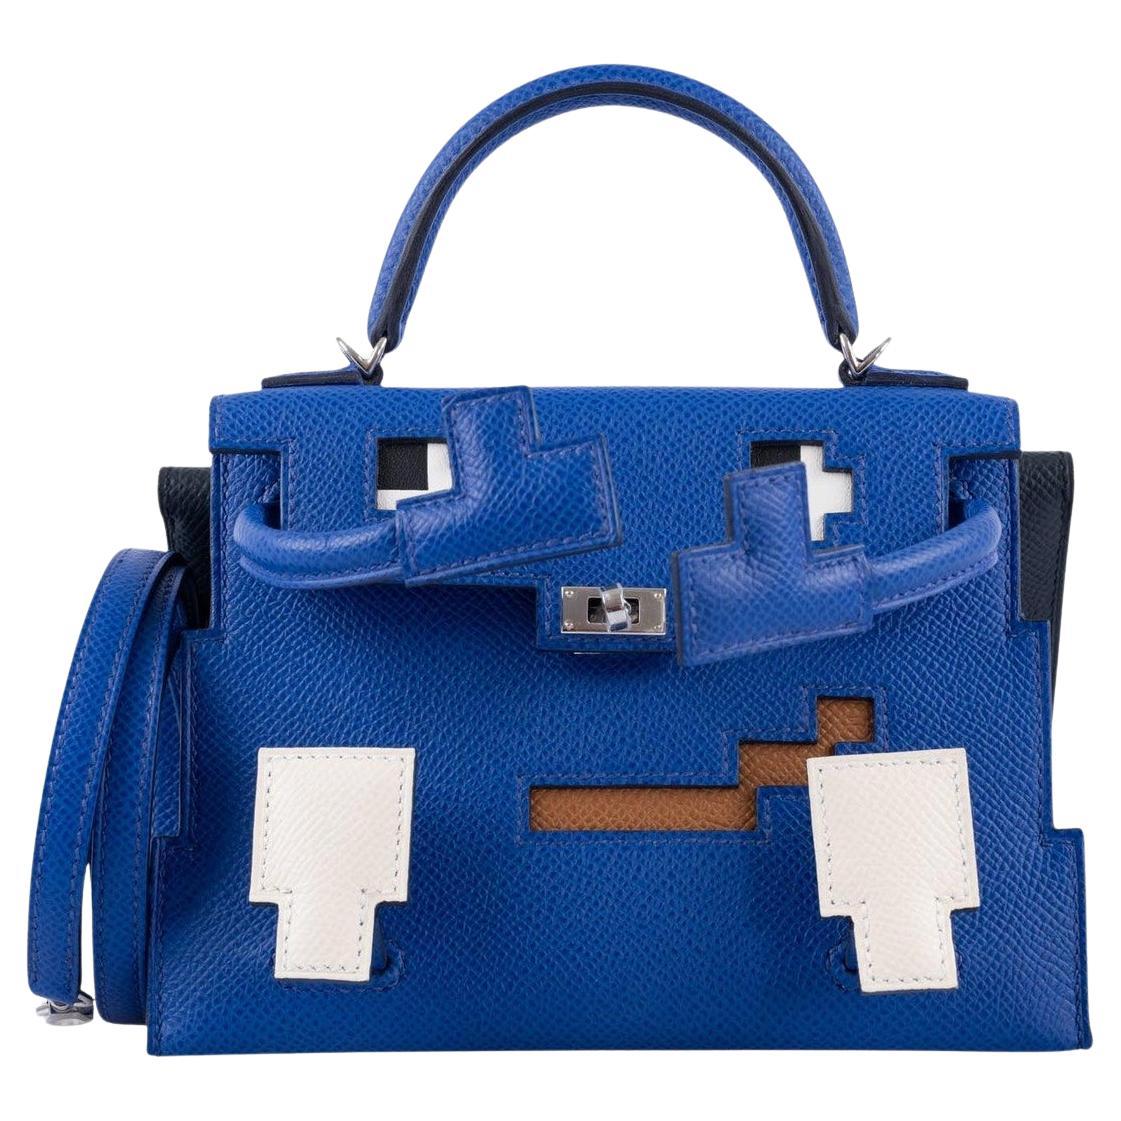 Hermès Kelly 28 Blue Leather Handbag (Pre-Owned)